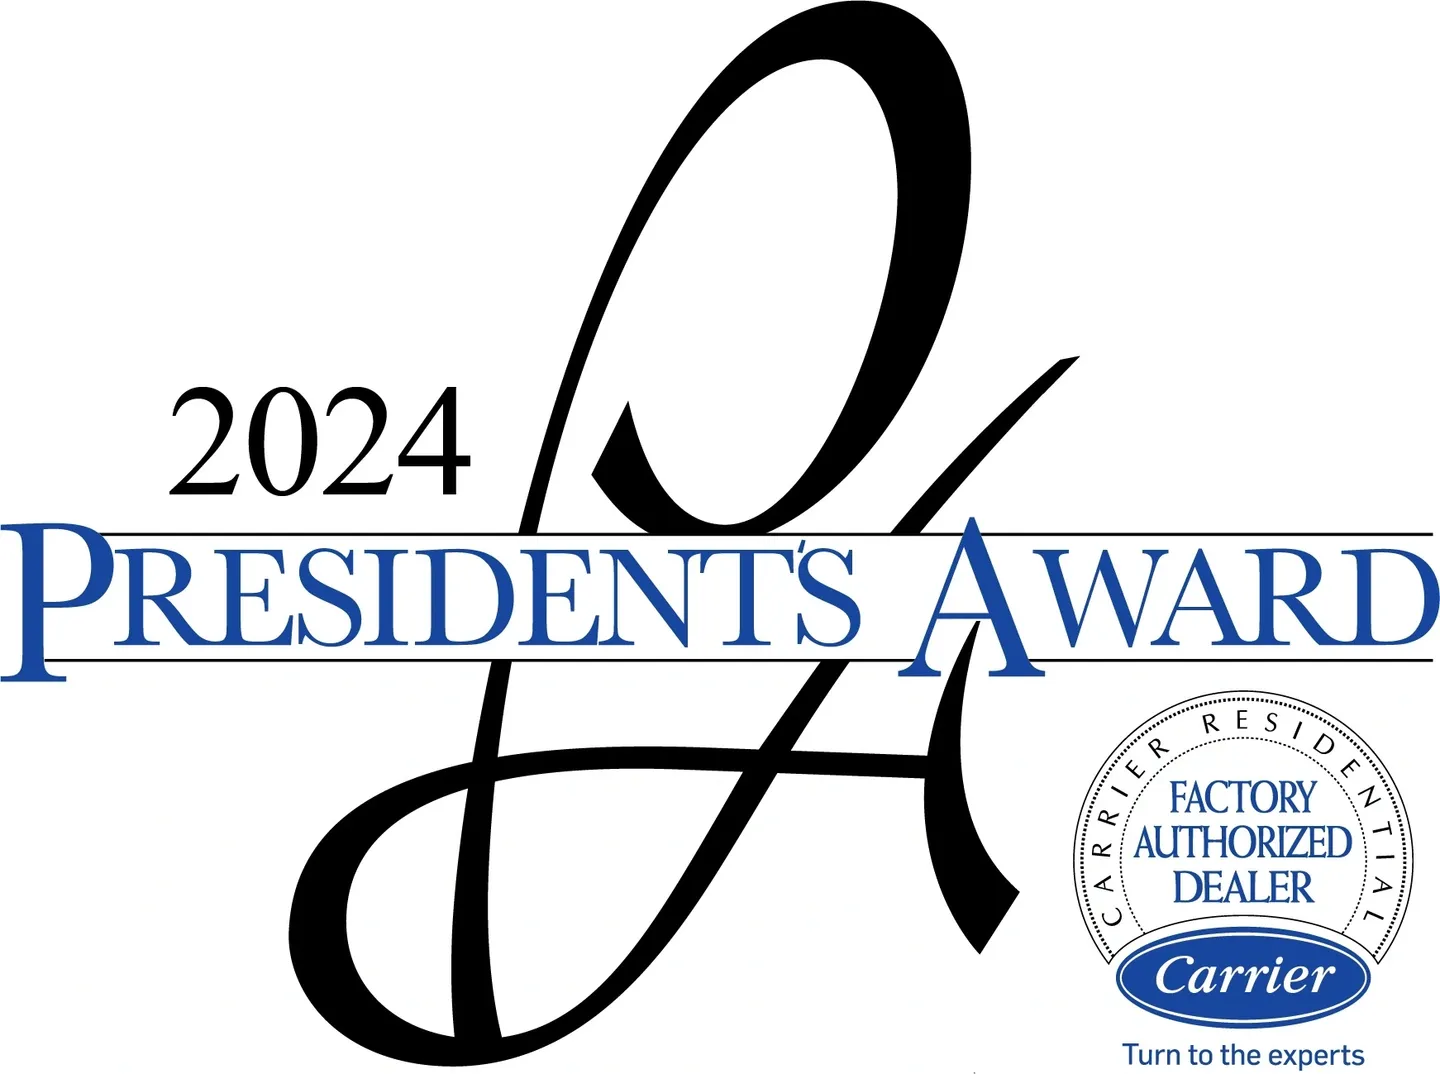 A logo for the 2 0 2 4 presidents award.